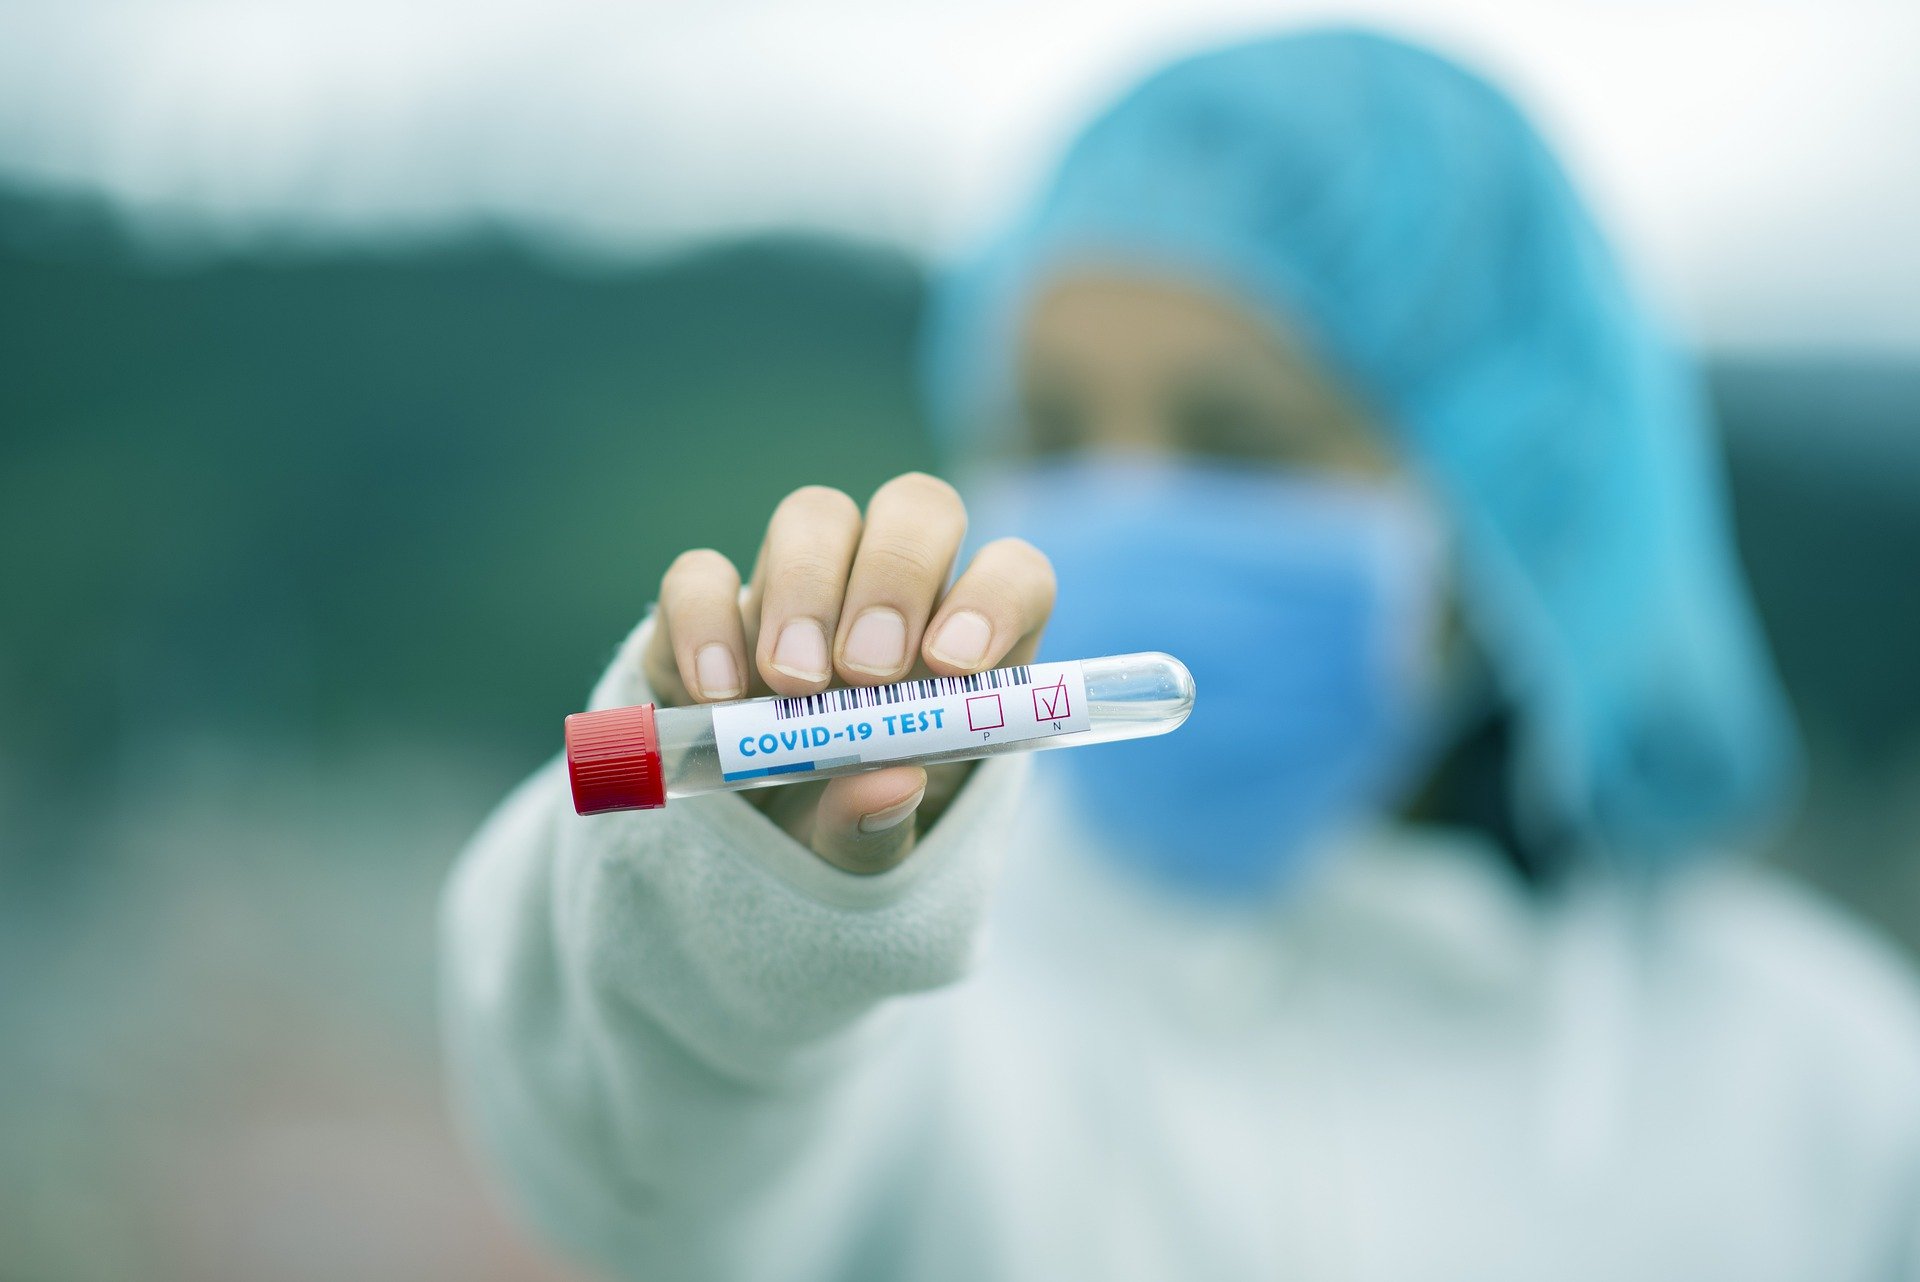 Coronavirus: in Toscana 14 nuovi casi (2 emersi da test sierologici), 6 decessi, 214 guarigioni